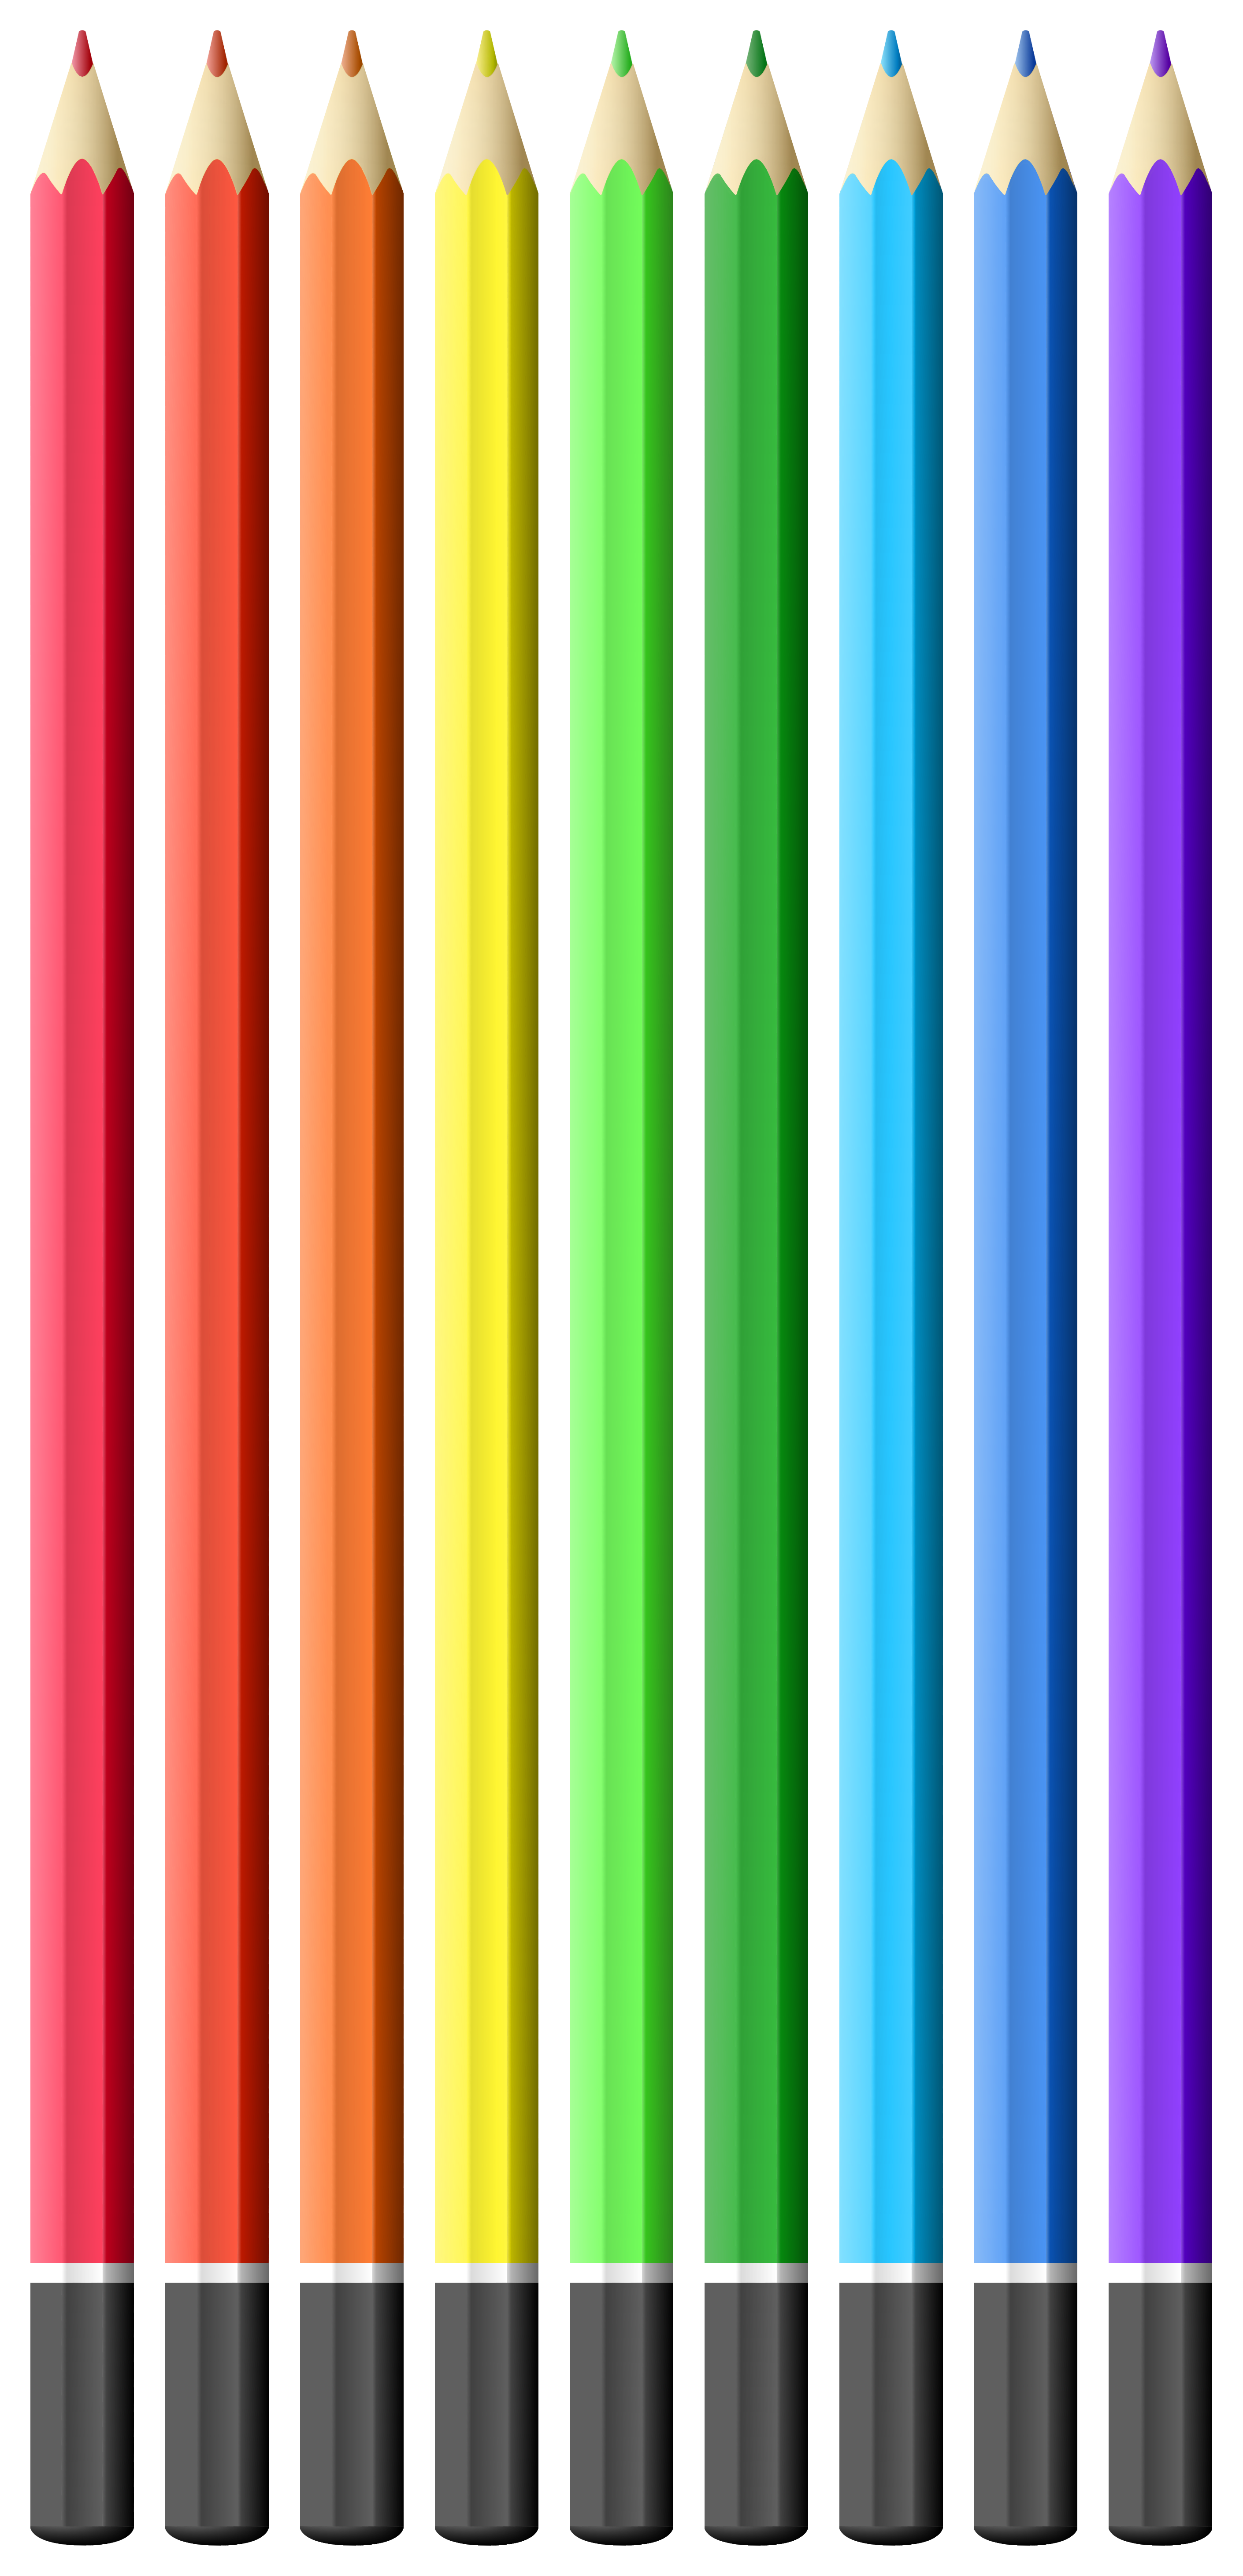 Long Colored Pencils Clipart - Colored Pencils Clipart